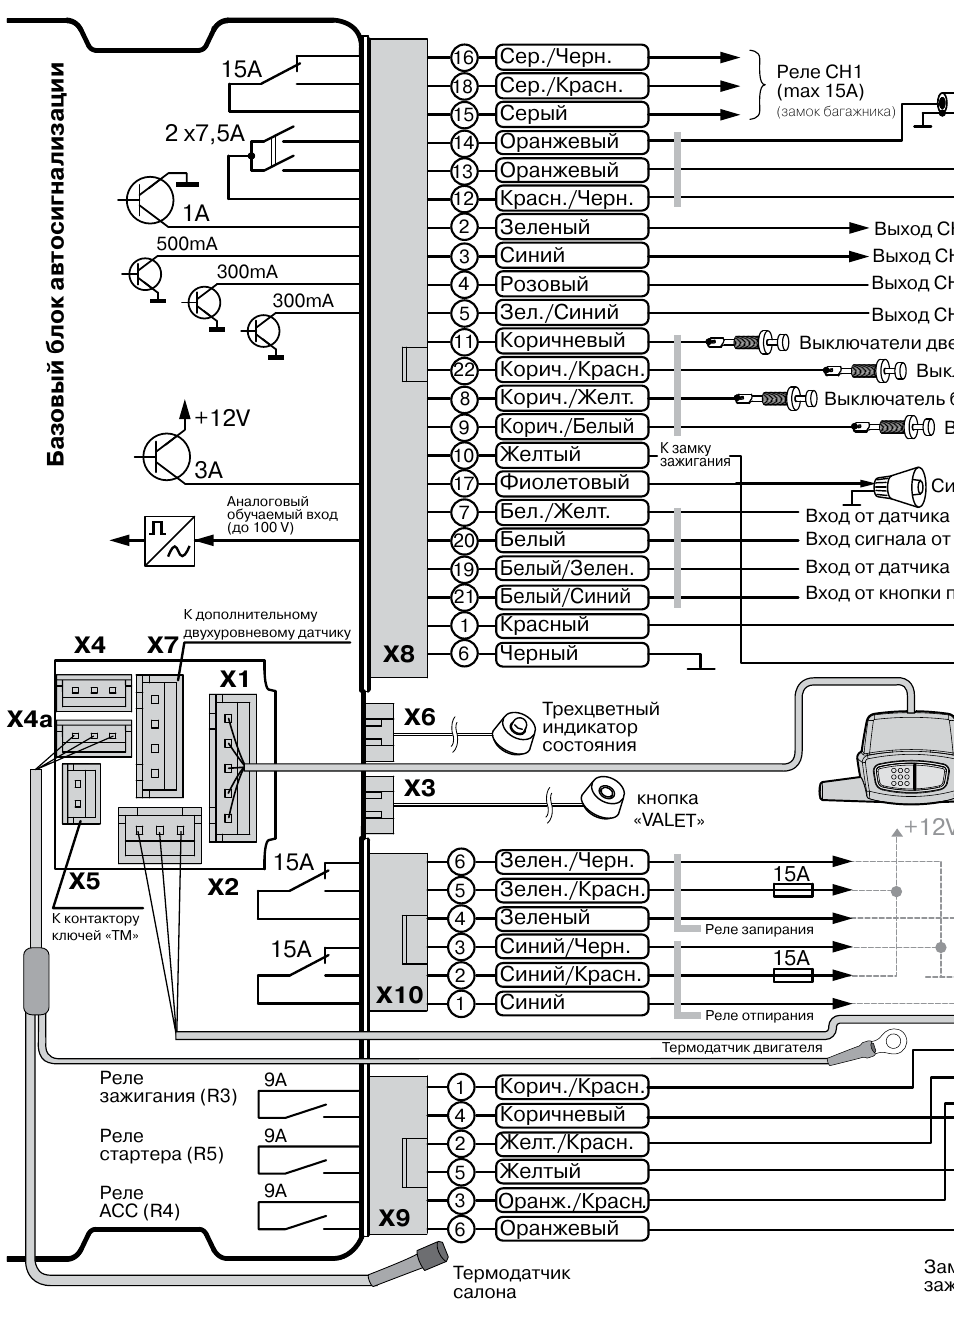 Сигнализация Пандора DXL 3500 схема подключения